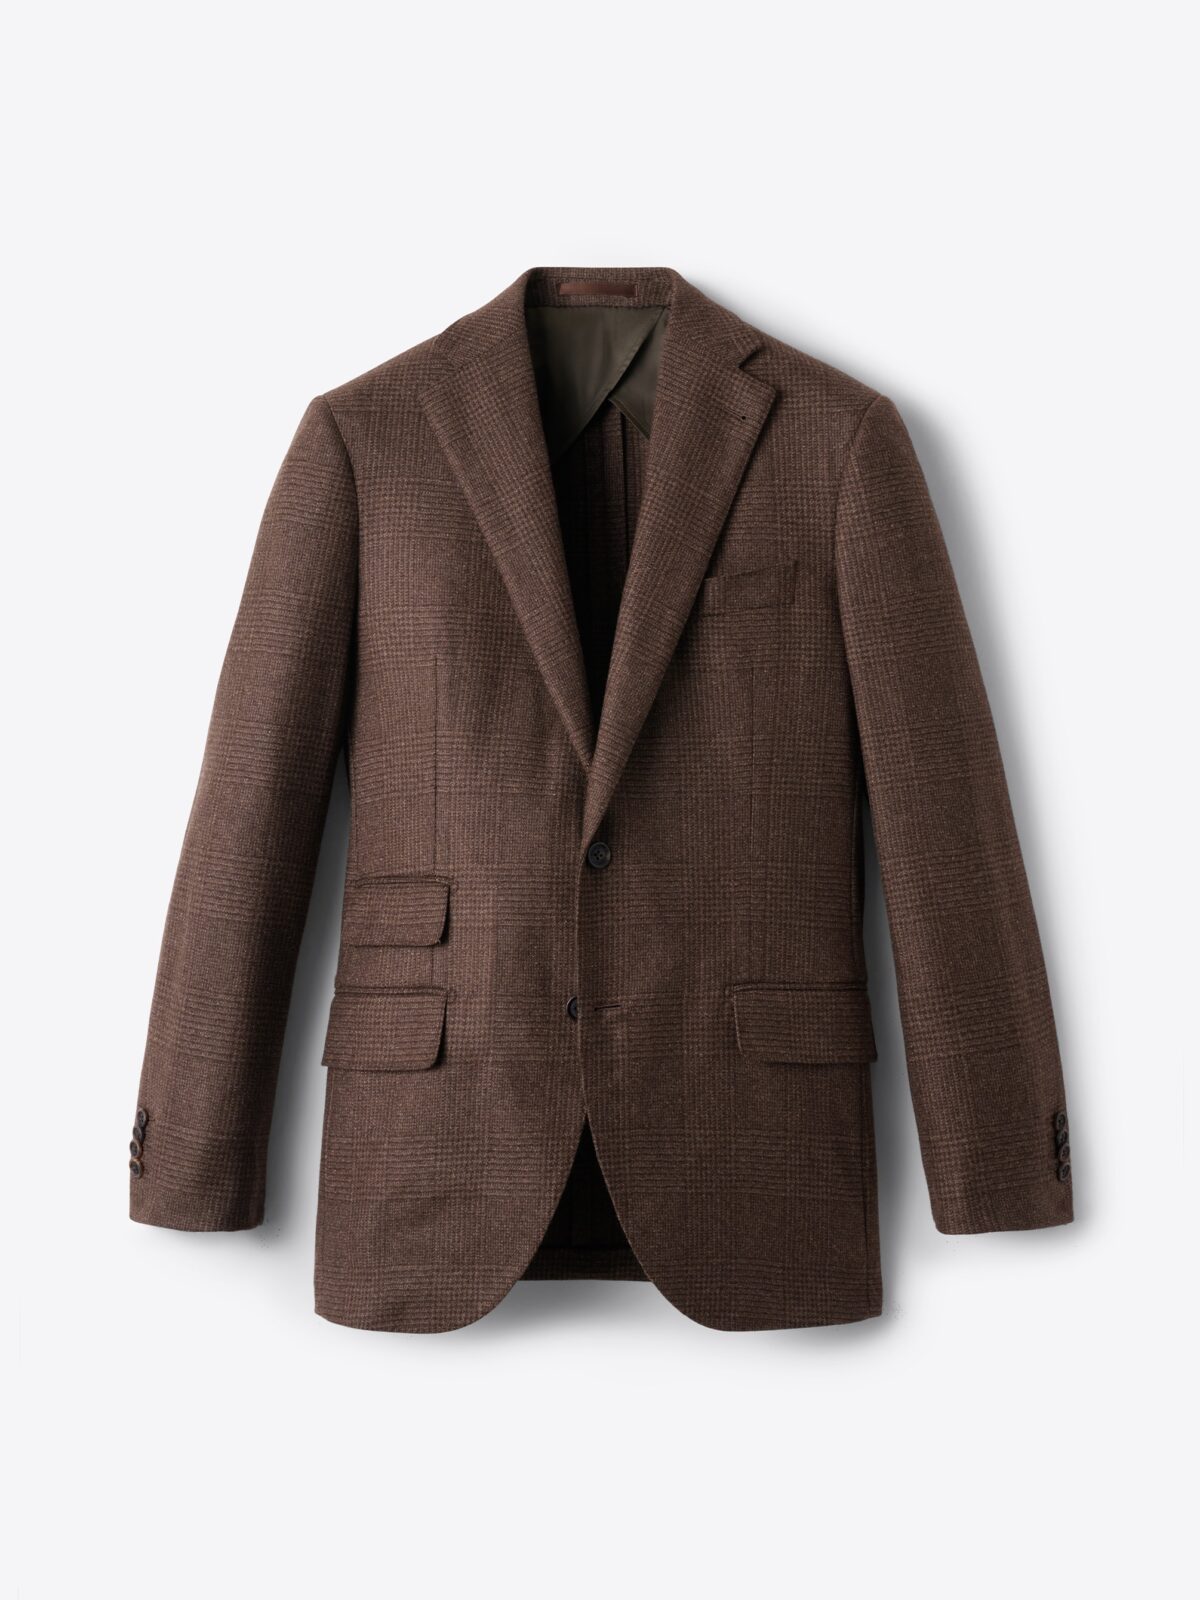 Loro Piana Fabric Brown Glen Plaid Wool Cashmere Hudson Jacket - Custom Fit  Tailored Clothing